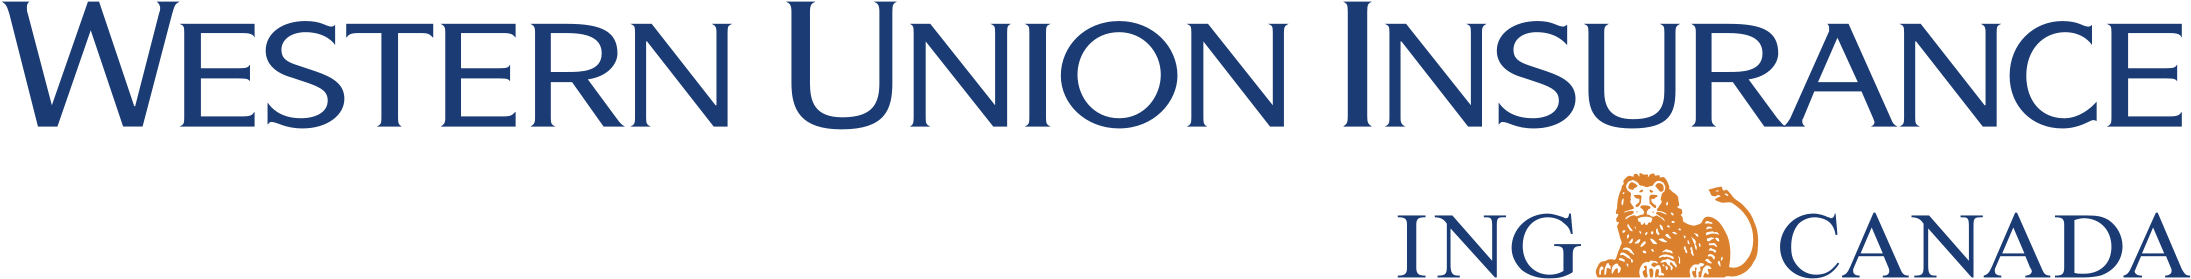 Western Union Insurance Logo Png Transparent - Logo (2400x2400), Png Download